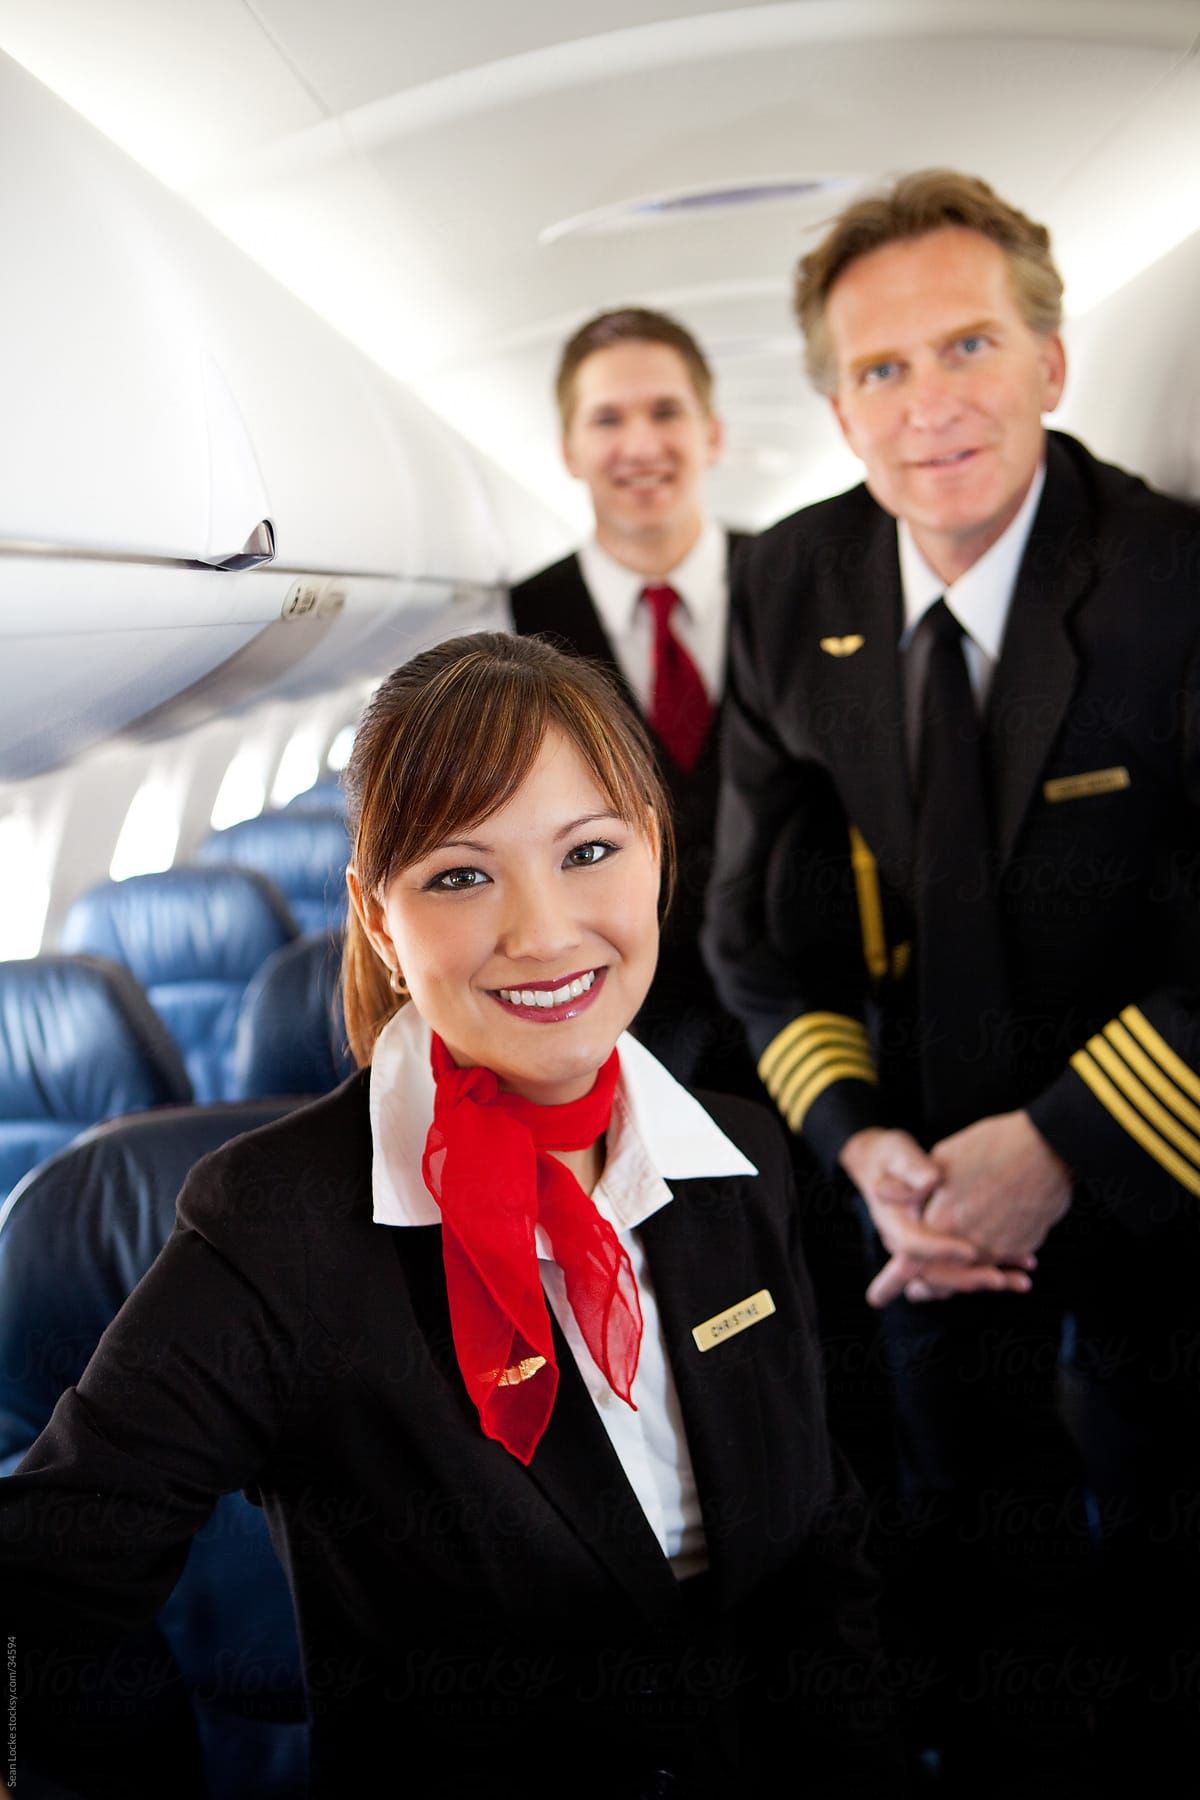 Airplane: Focus on Flight Attendant